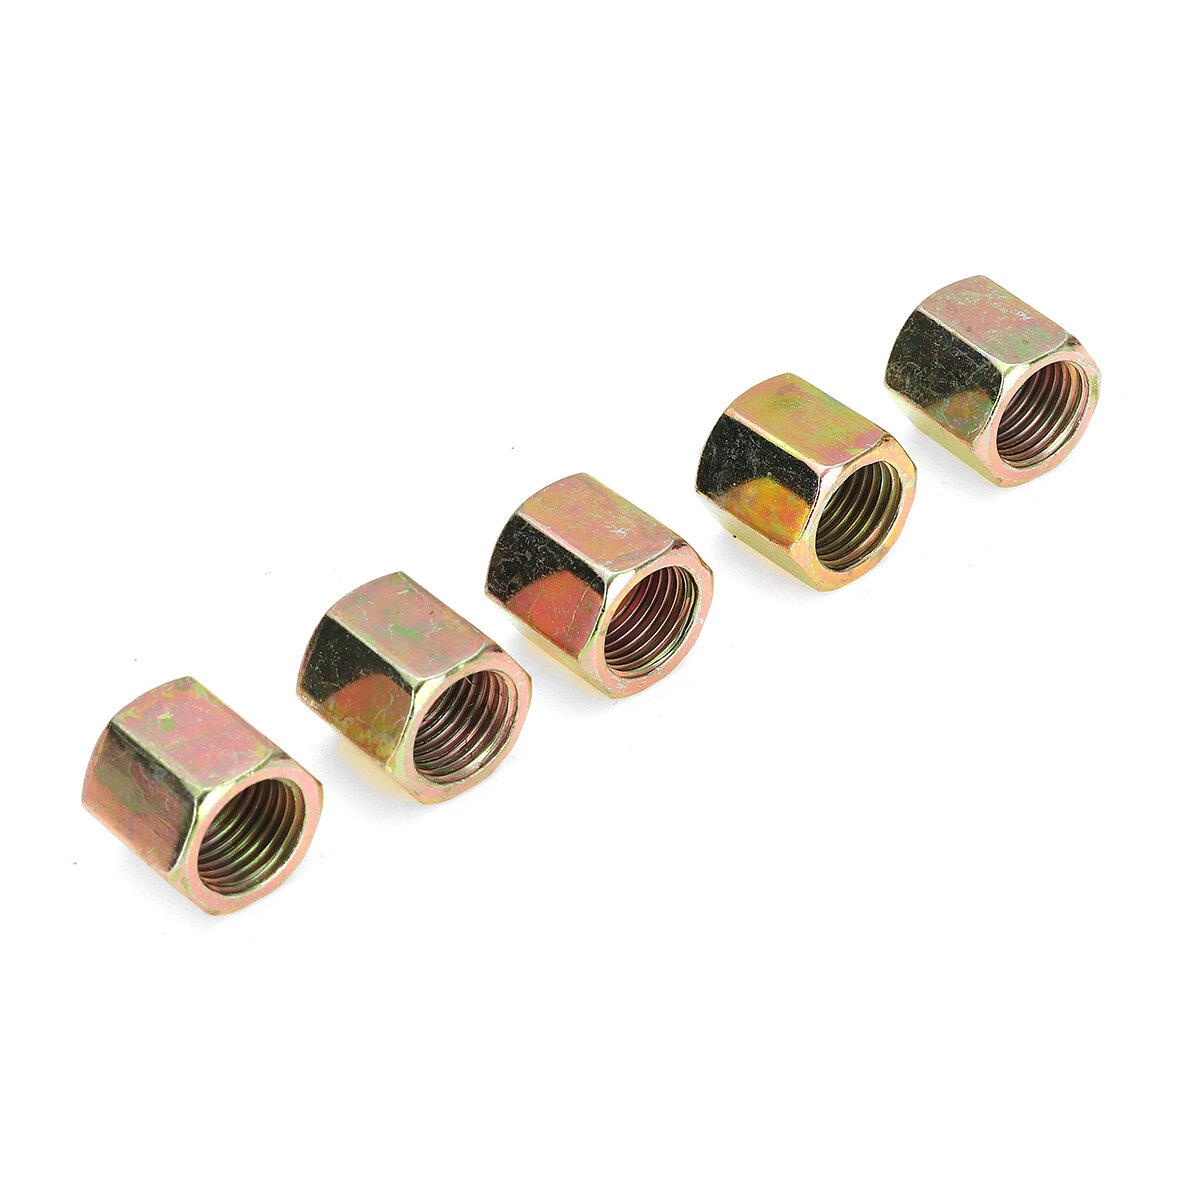 5Pcs 3/16" Copper Brake Line Pipe Fittings Female End Union Metric Nuts M10 x 1mm